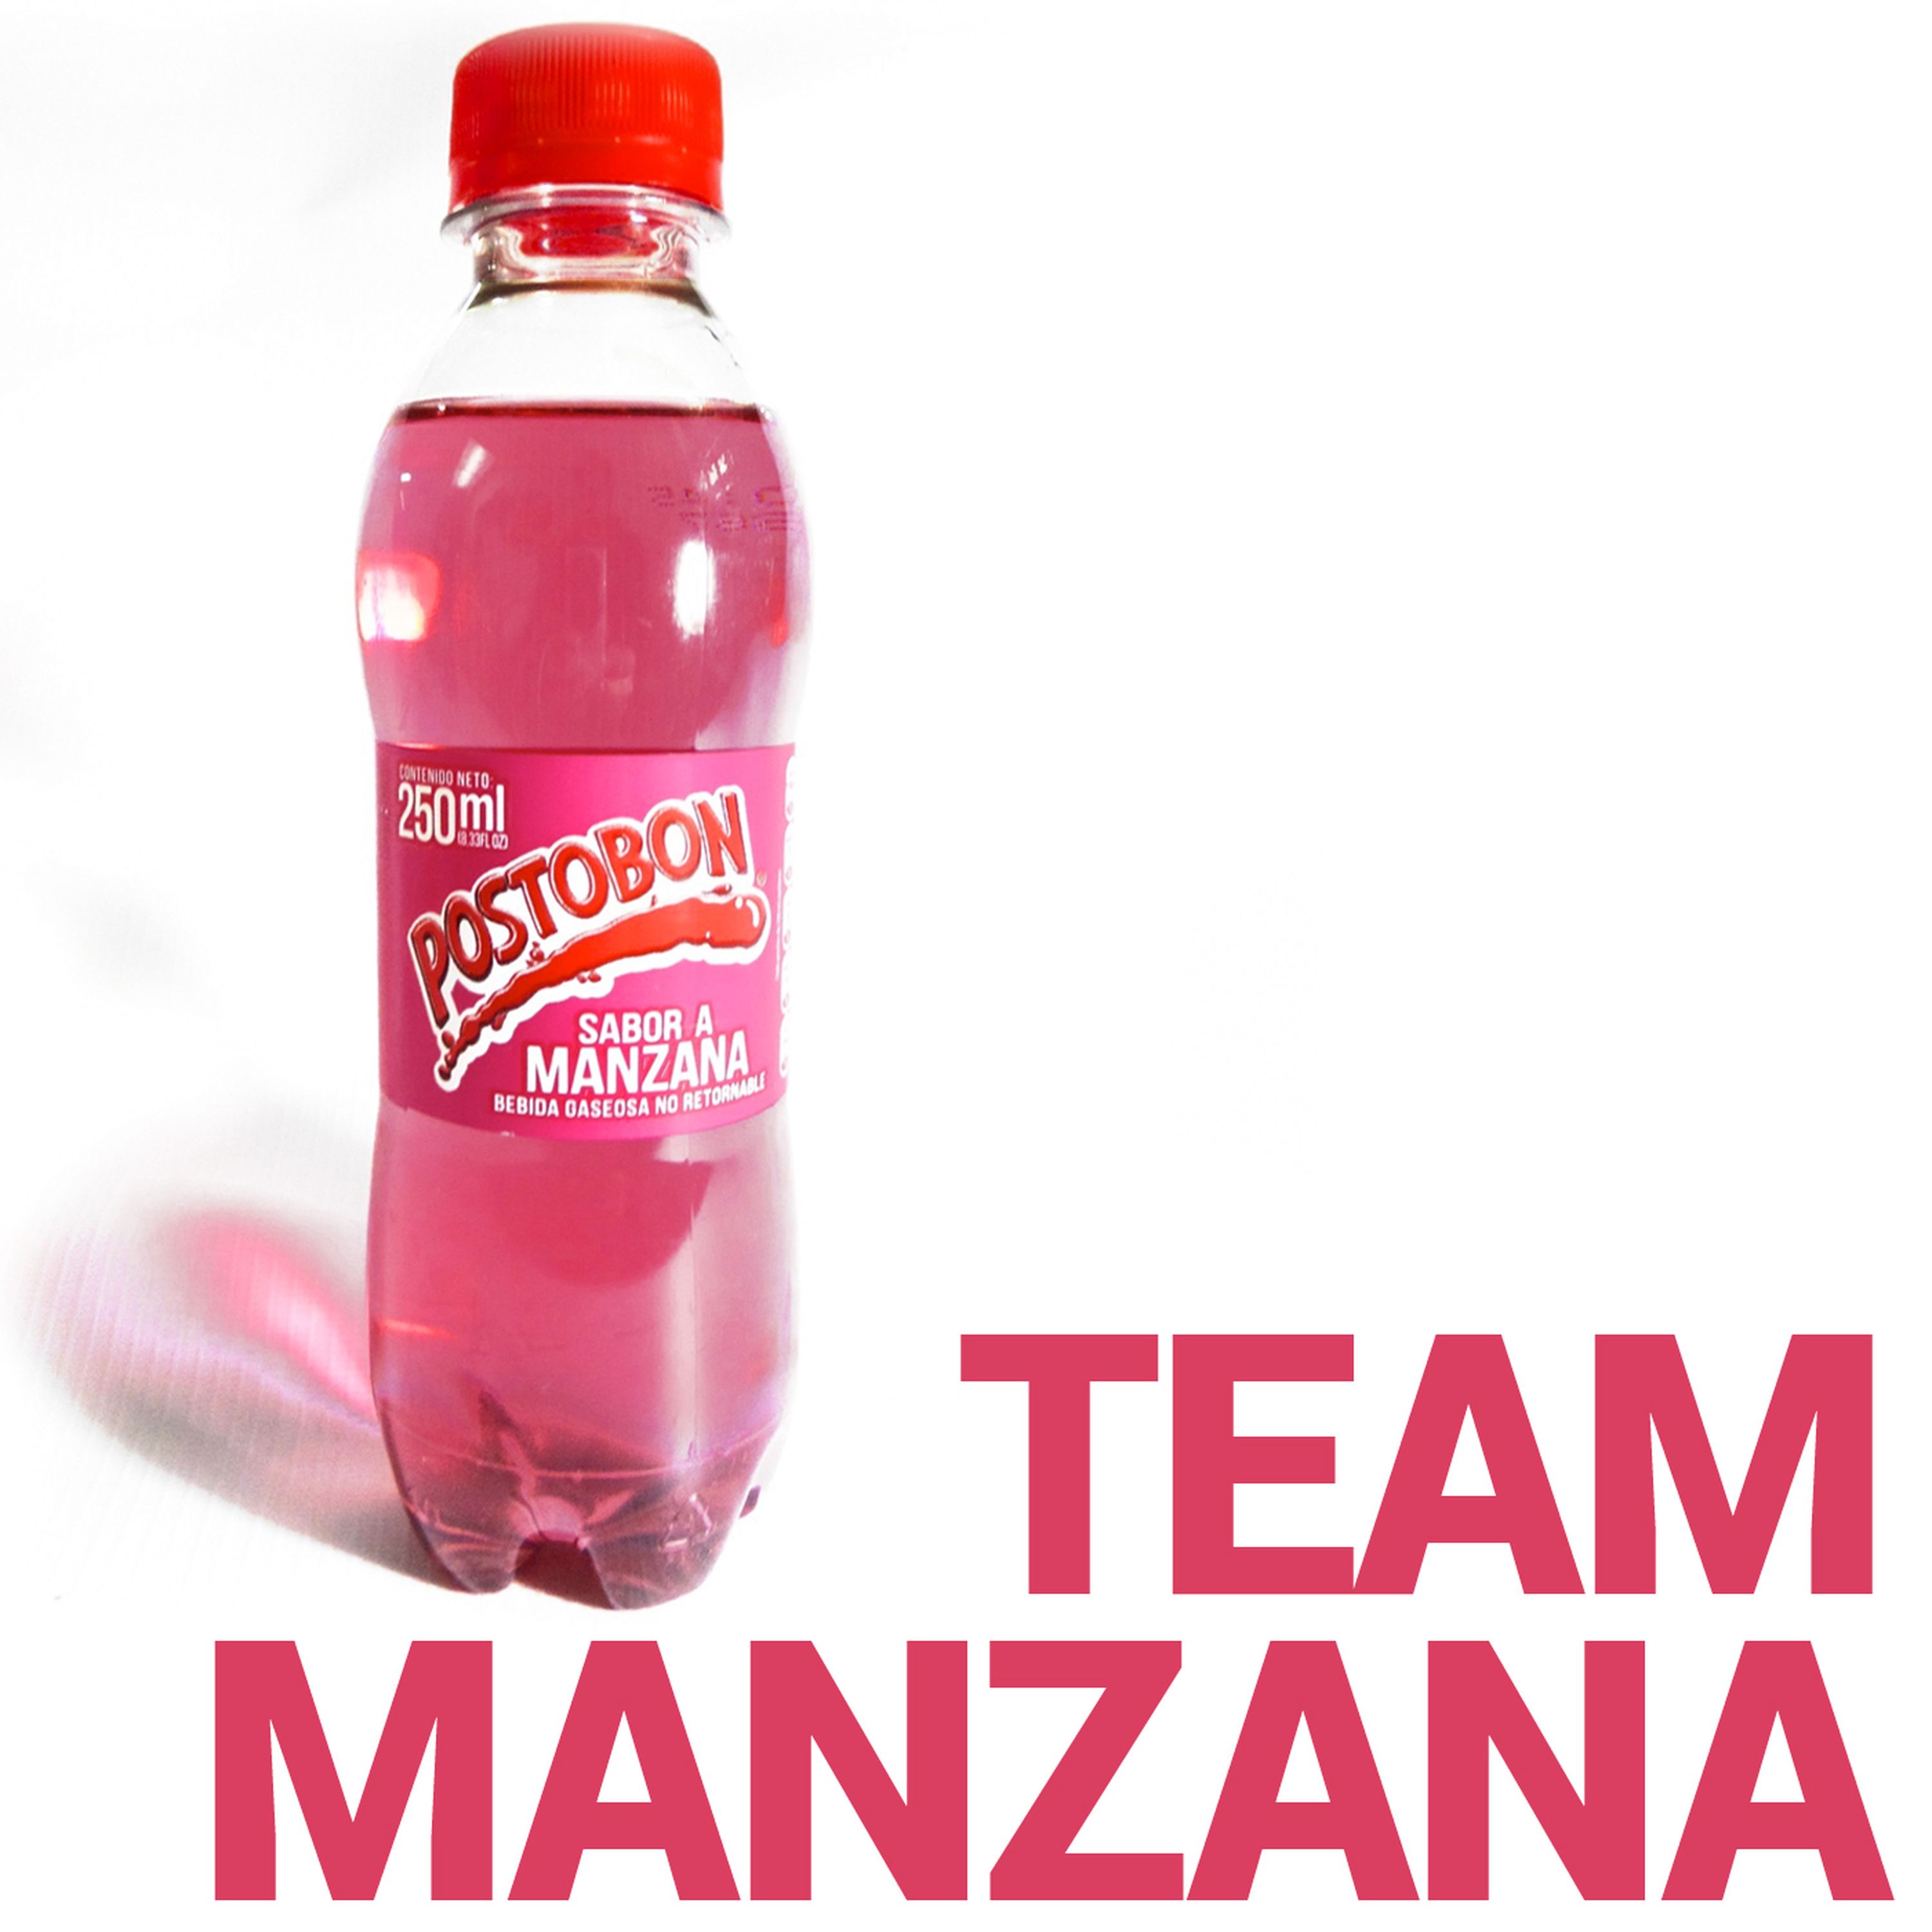 Team Manzana